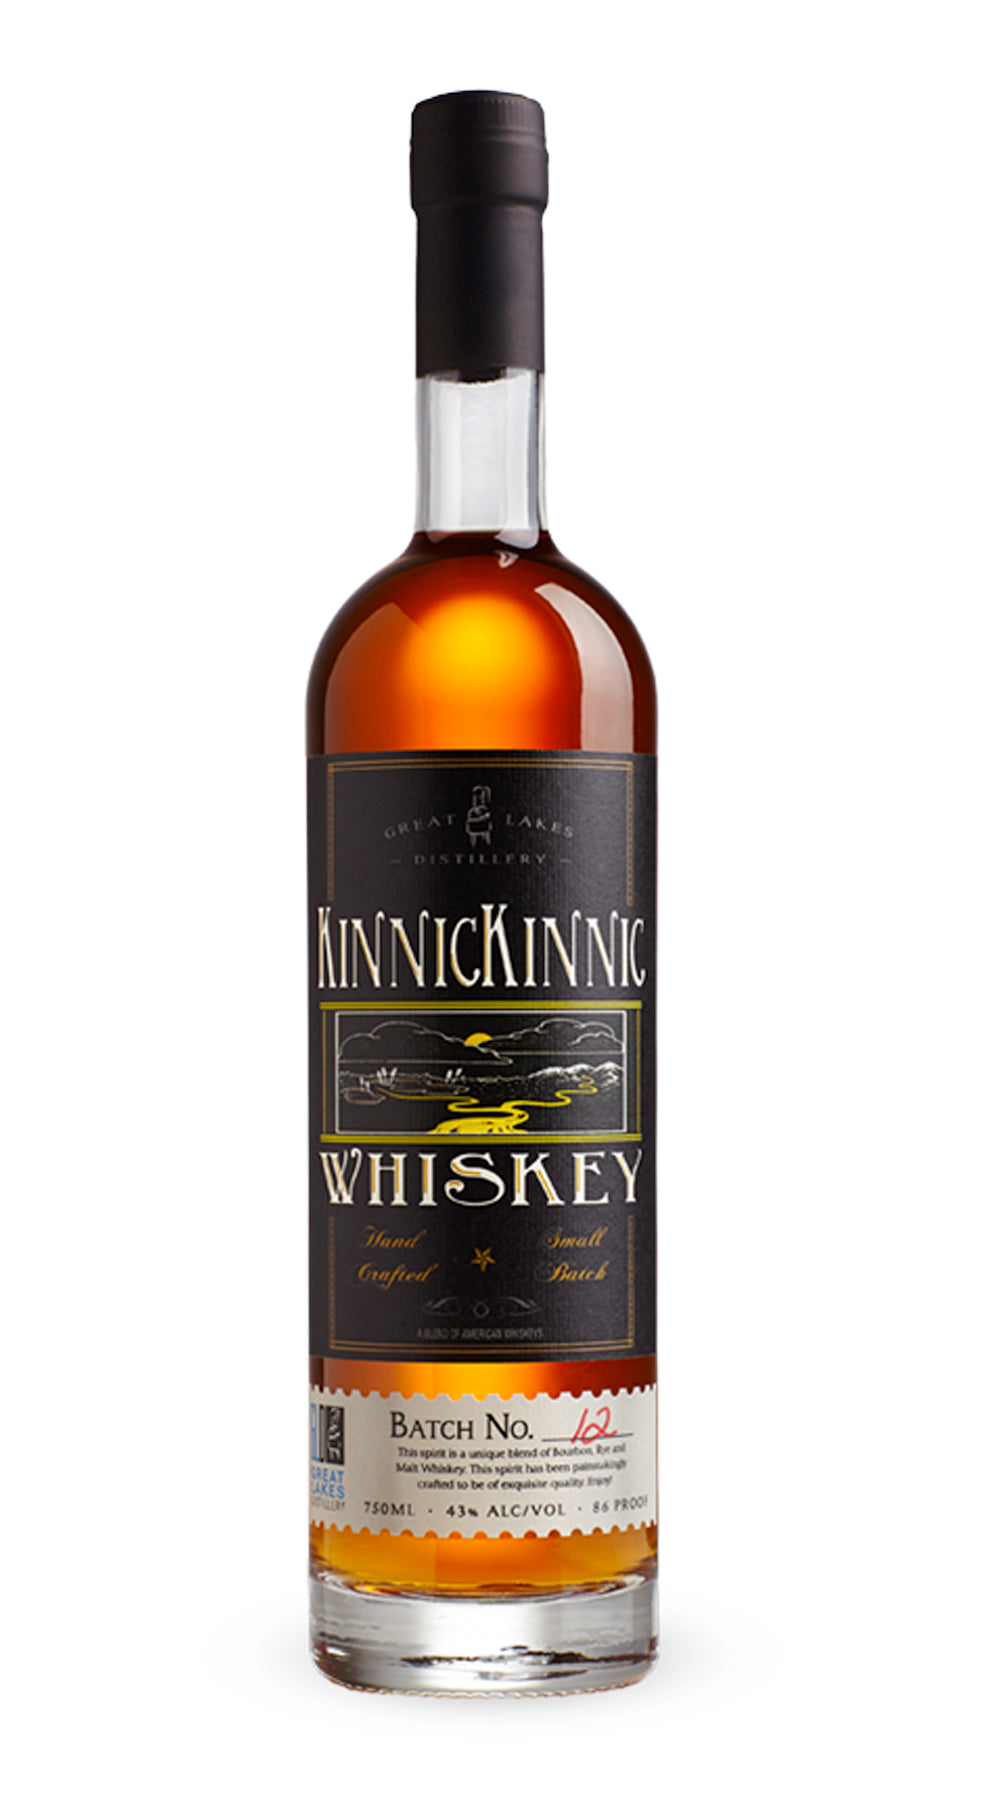 Kinnickinnic Whiskey